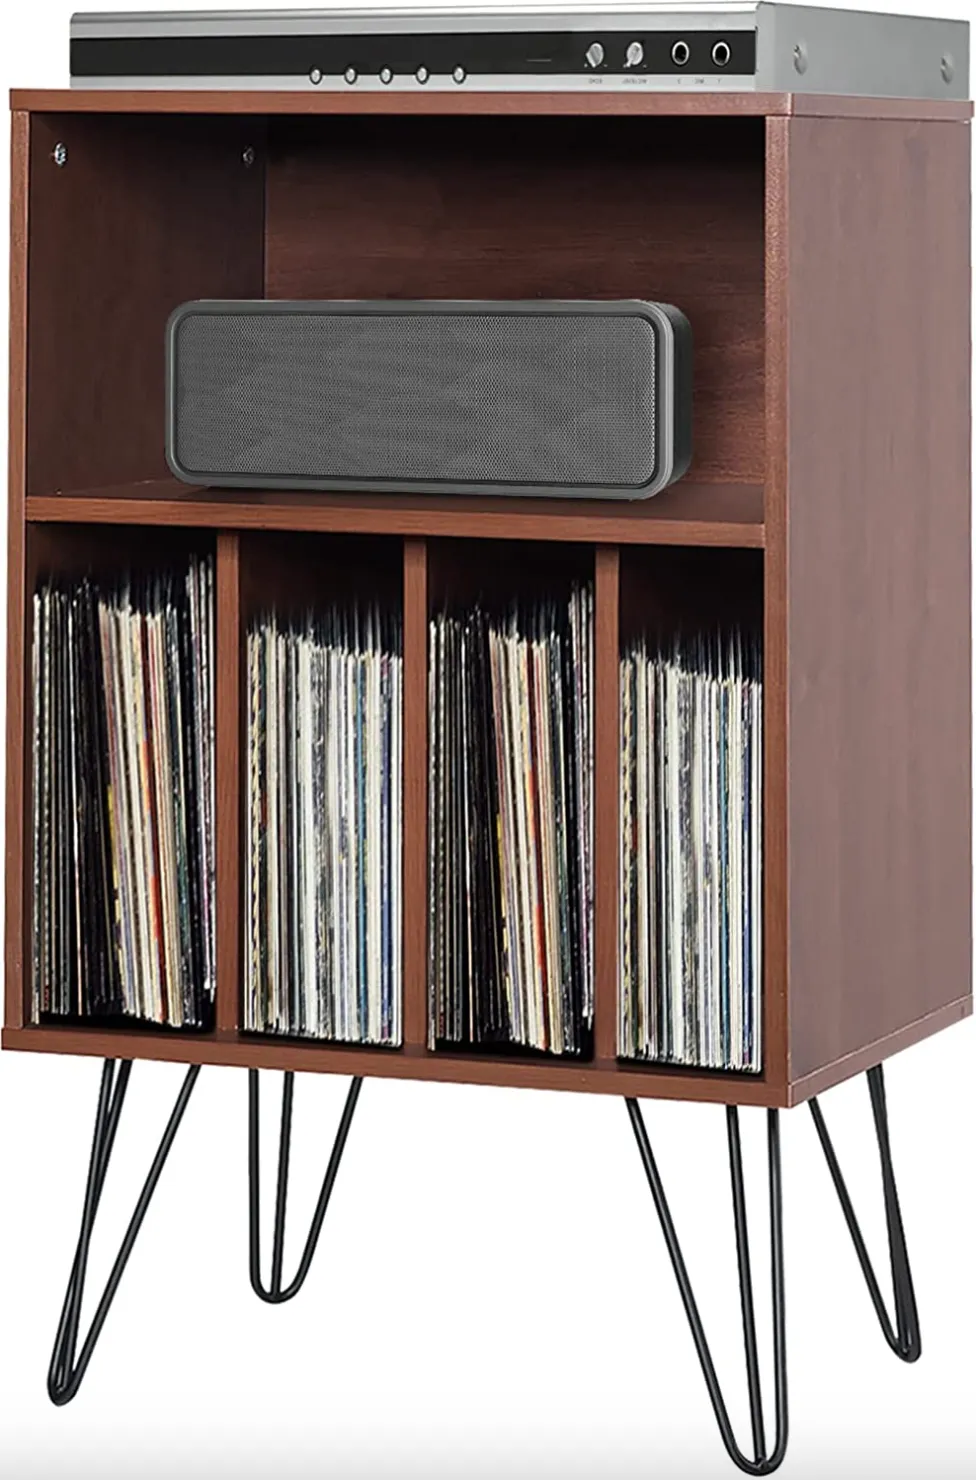 COSTWAY Vinyl Record Storage